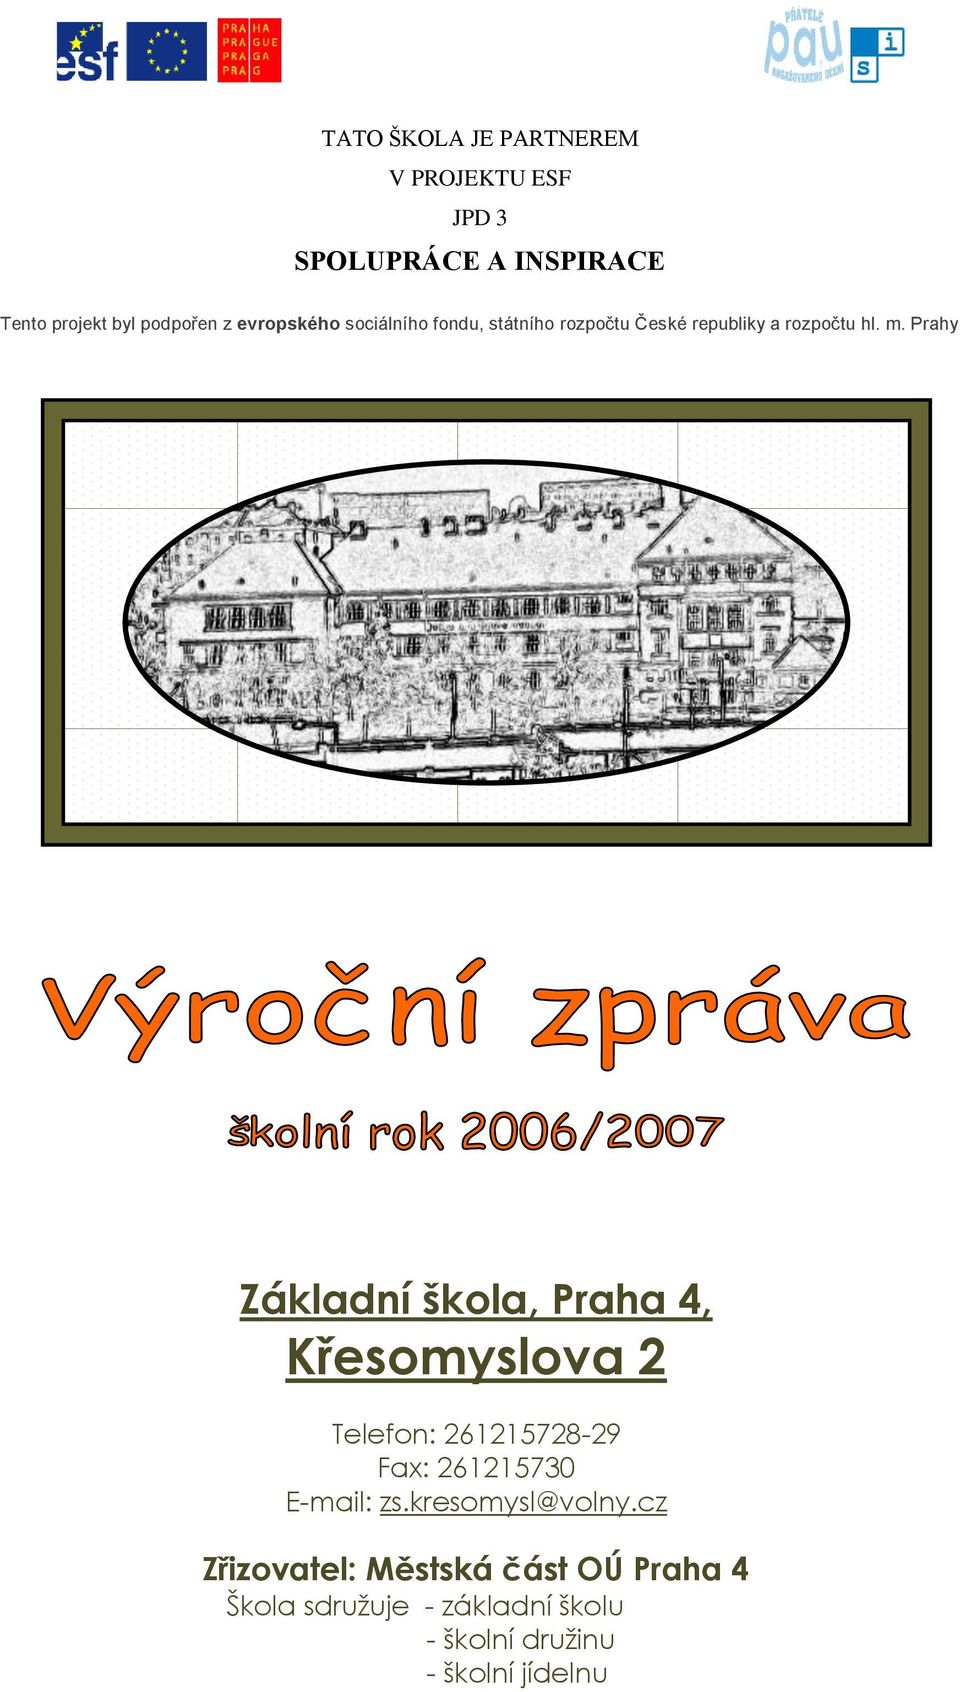 Prahy Základní škola, Praha 4, Křesomyslova 2 Telefon: 261215728-29 Fax: 261215730 E-mail: zs.